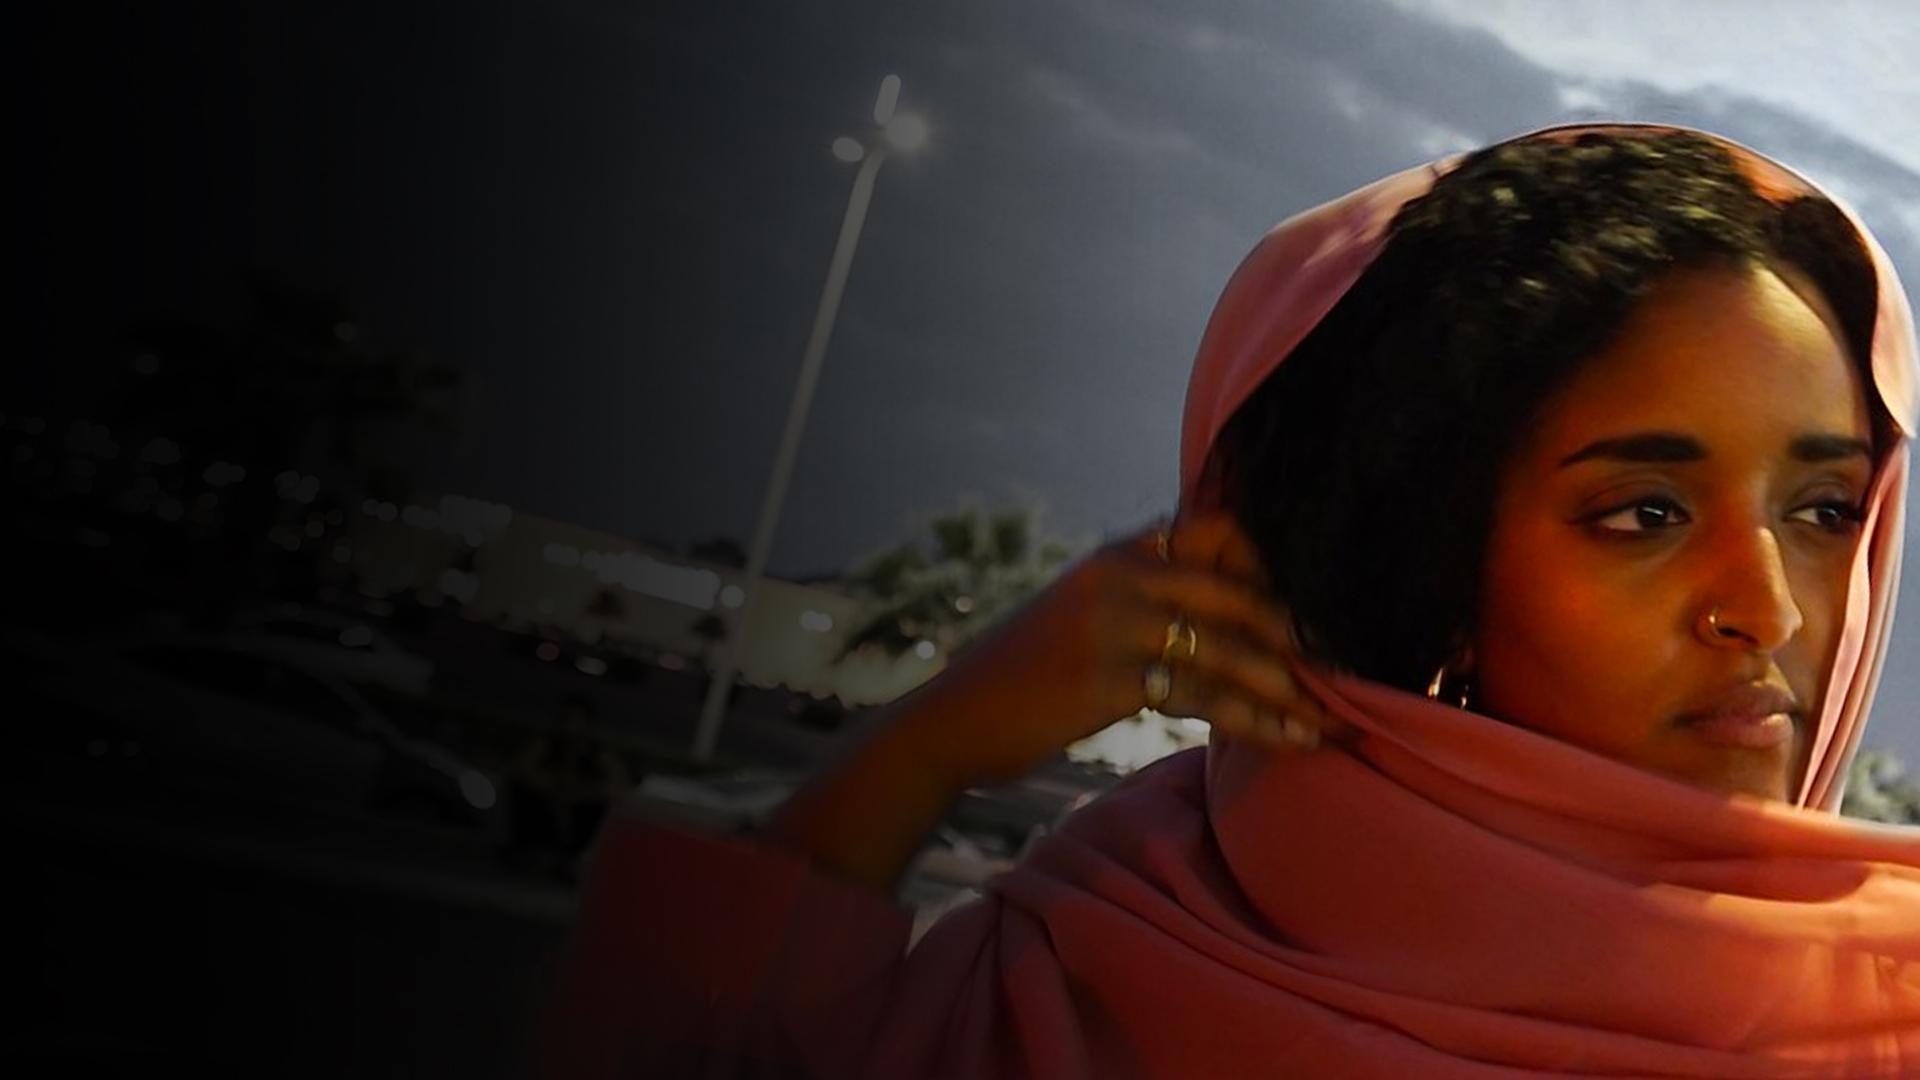 Inside the Real Saudi Arabia: Why I Had to Leave